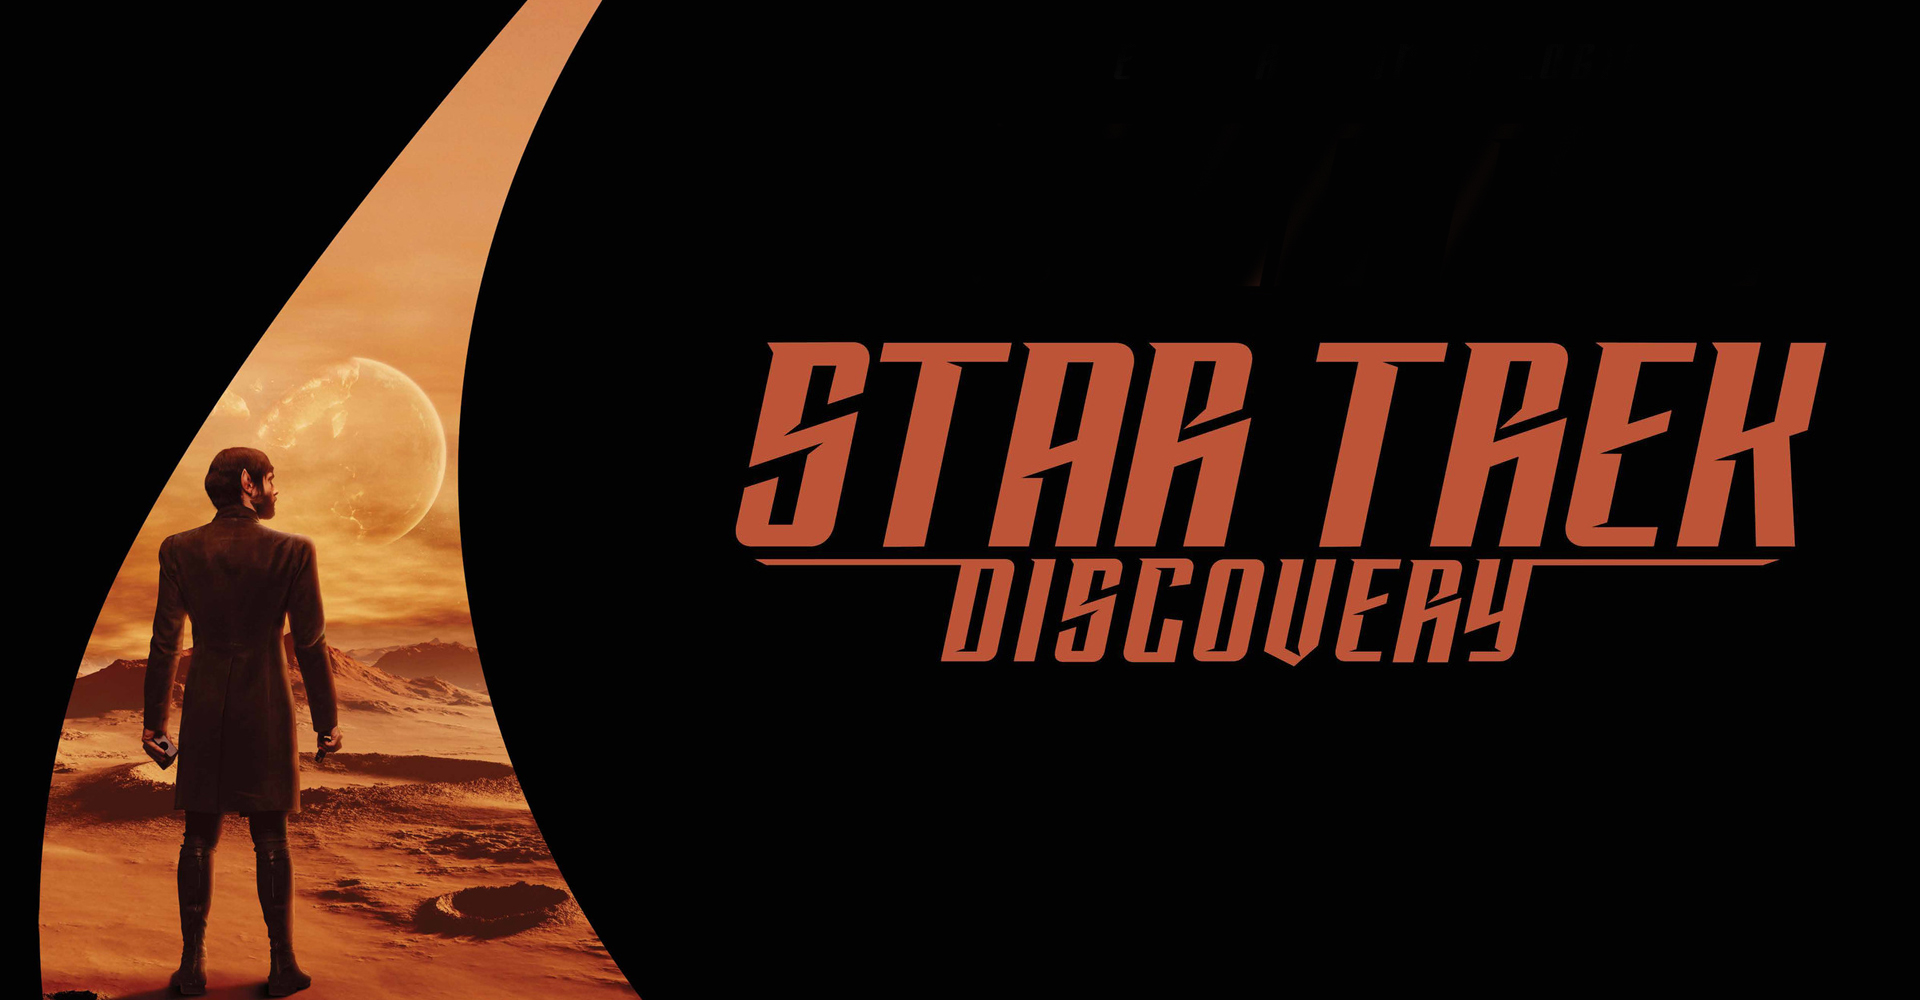 star trek: discovery